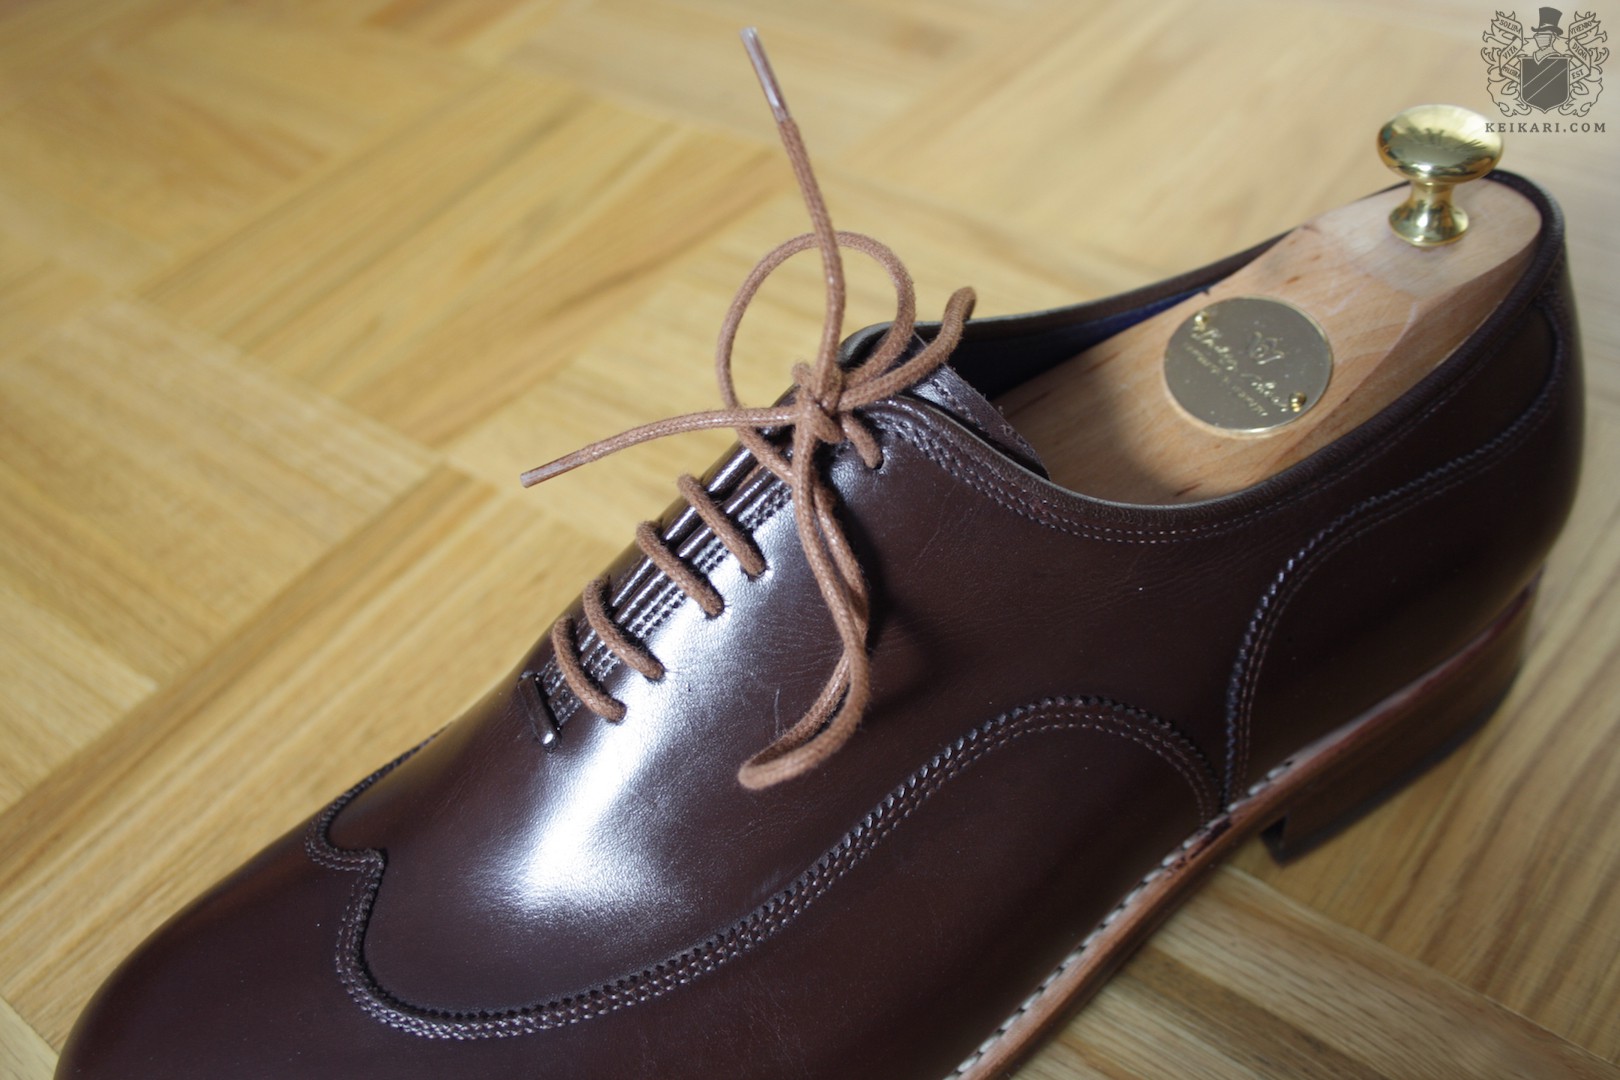 Buday_made_to_measure_shoes_at_Keikari_dot_com10